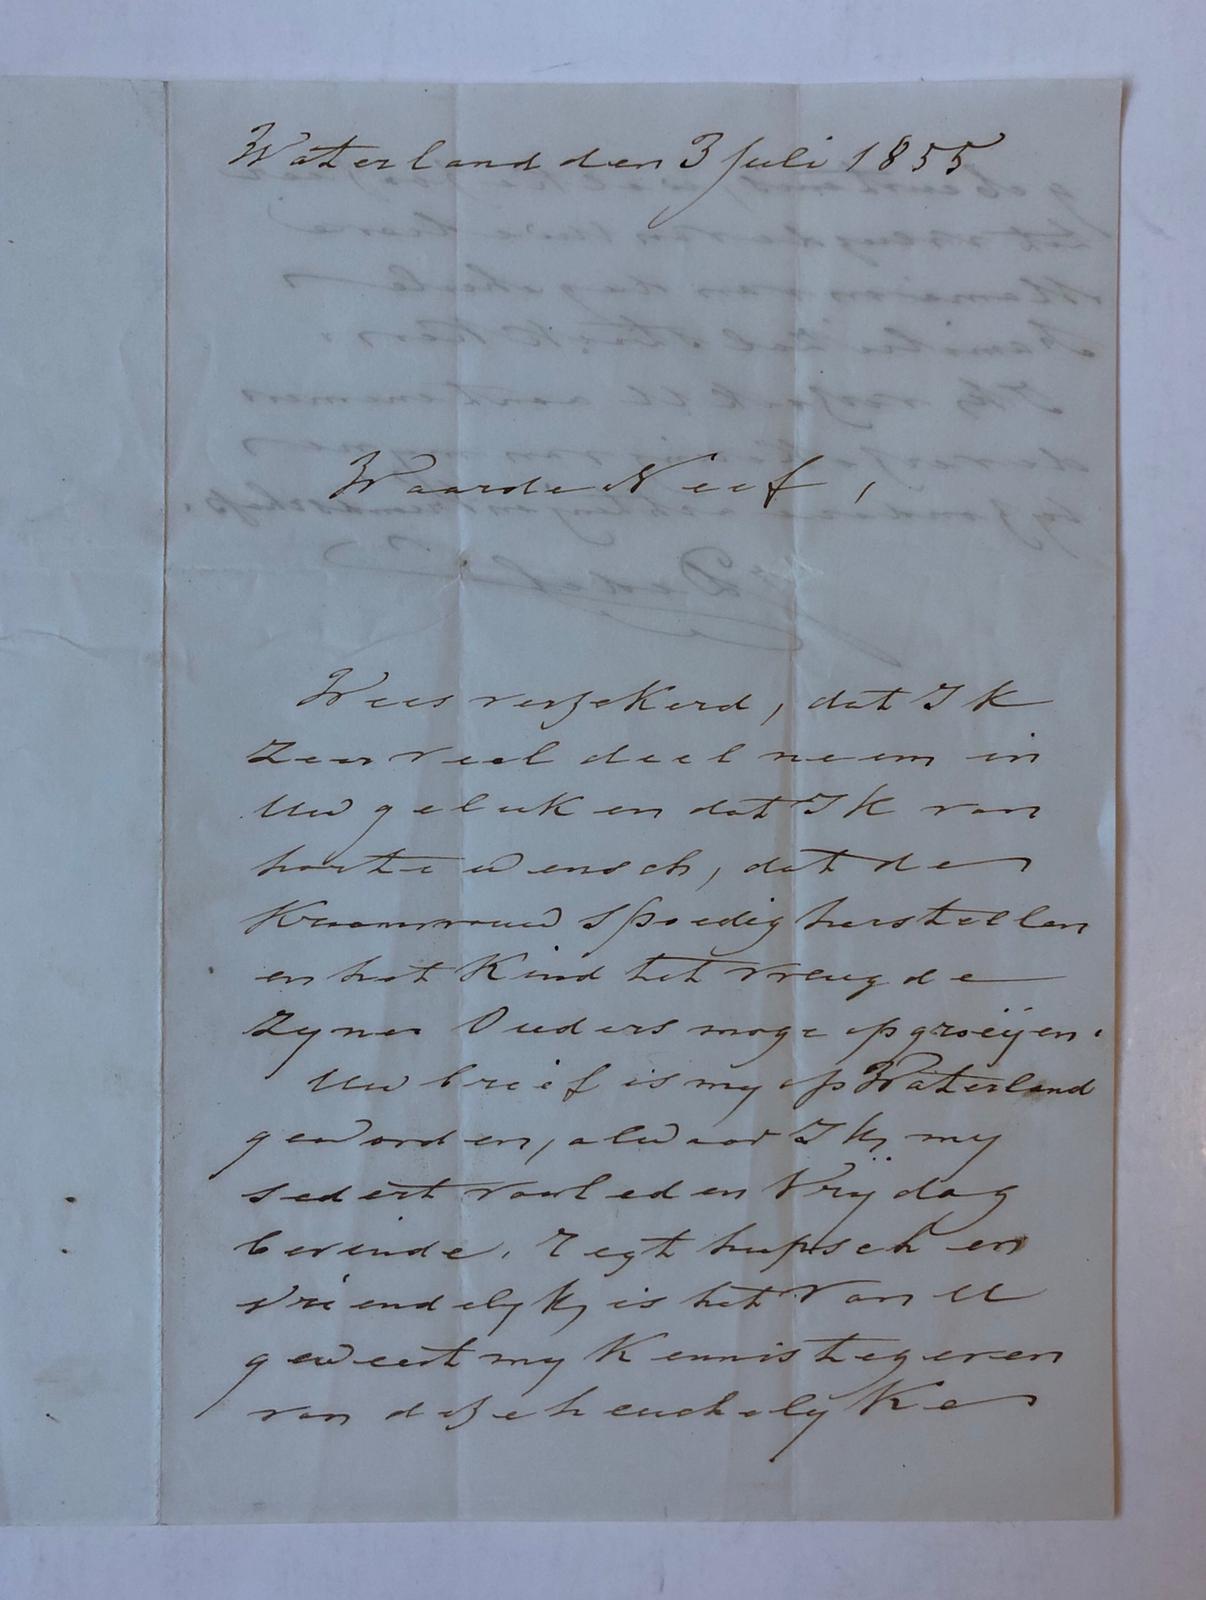  - [Manuscipt] DEDEL Brief van J. Dedel, Waterland 3 juli 1855, aan `waarde neef'. 8(: 2 p.